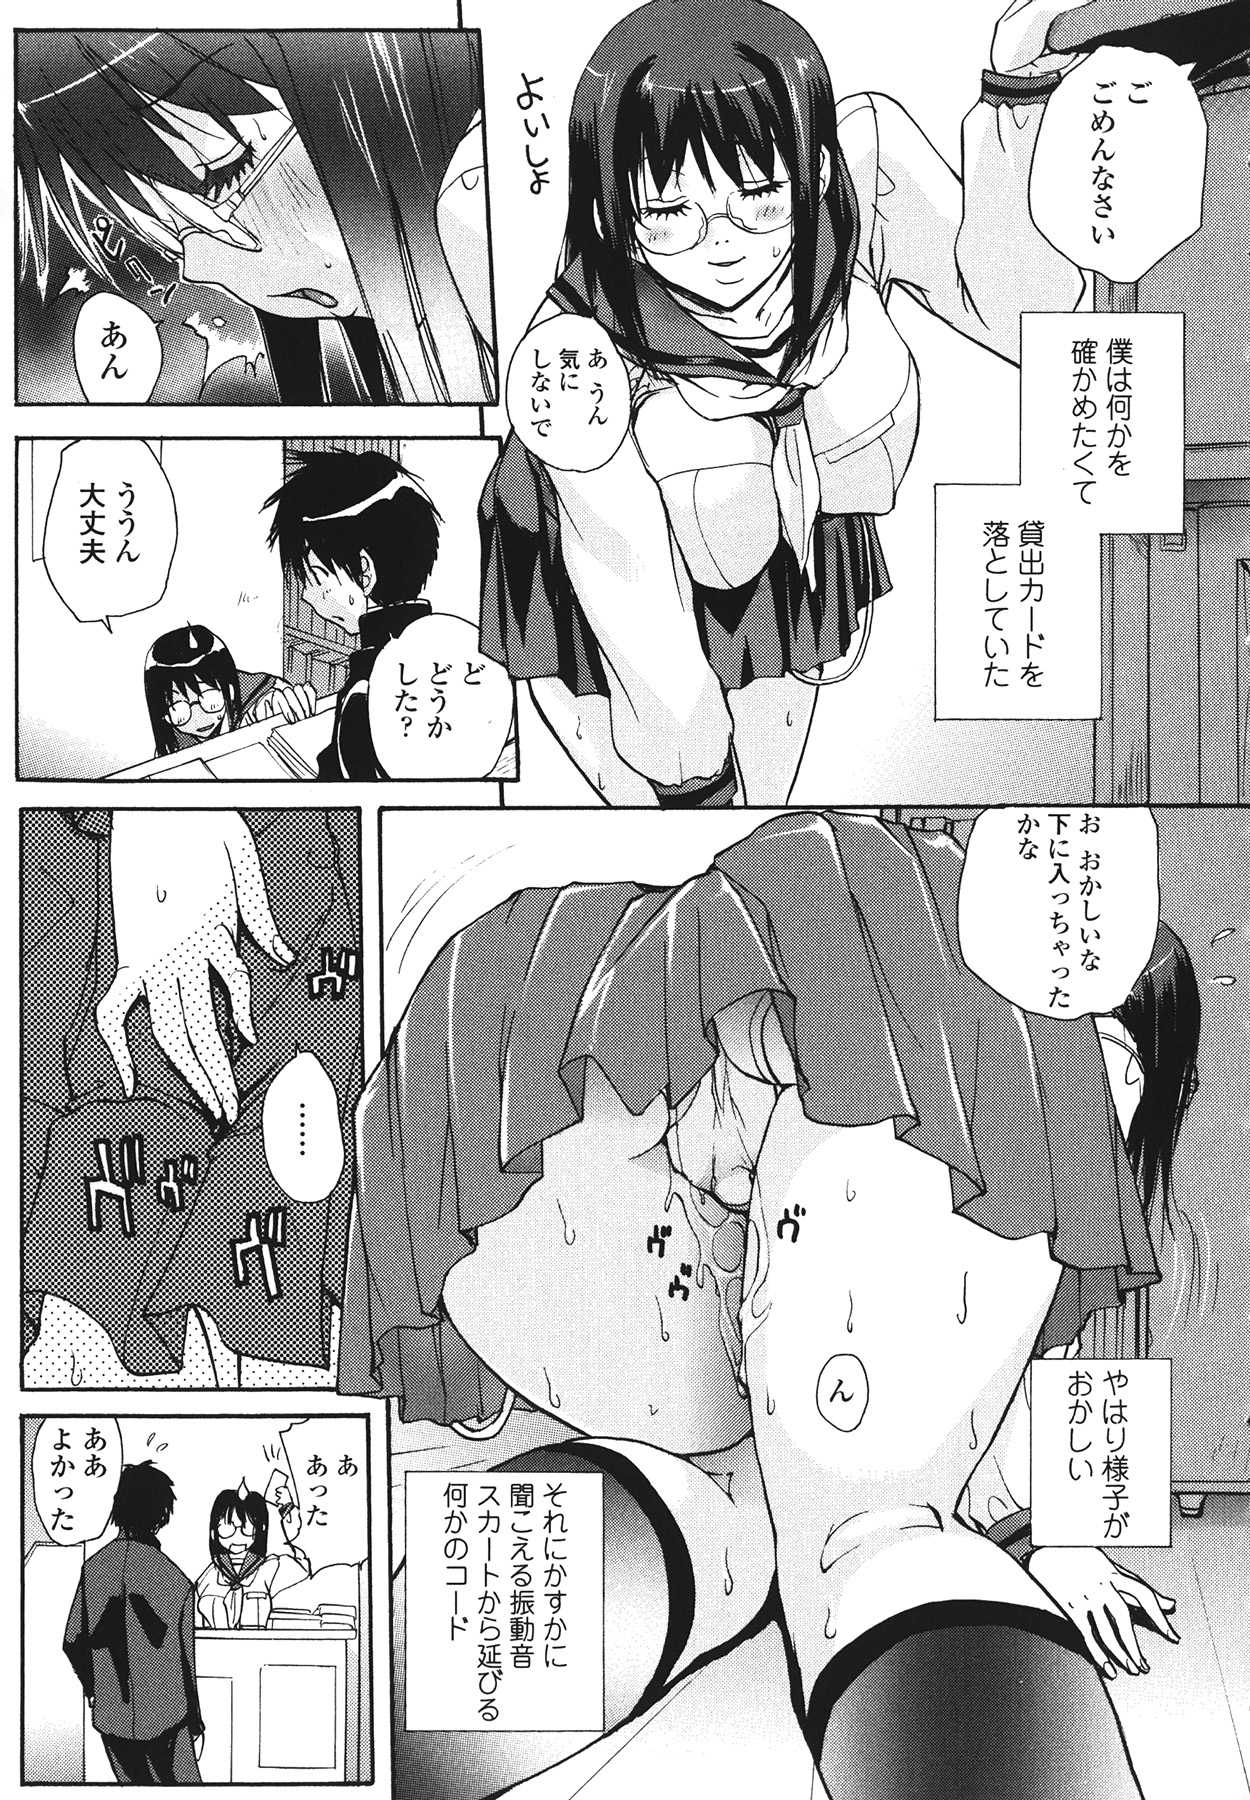 [Kika=Zaru] Love Ala Mode (成年コミック) [kika＝ざる]  ラブ・ア・ラ・モード [2009-08-10]